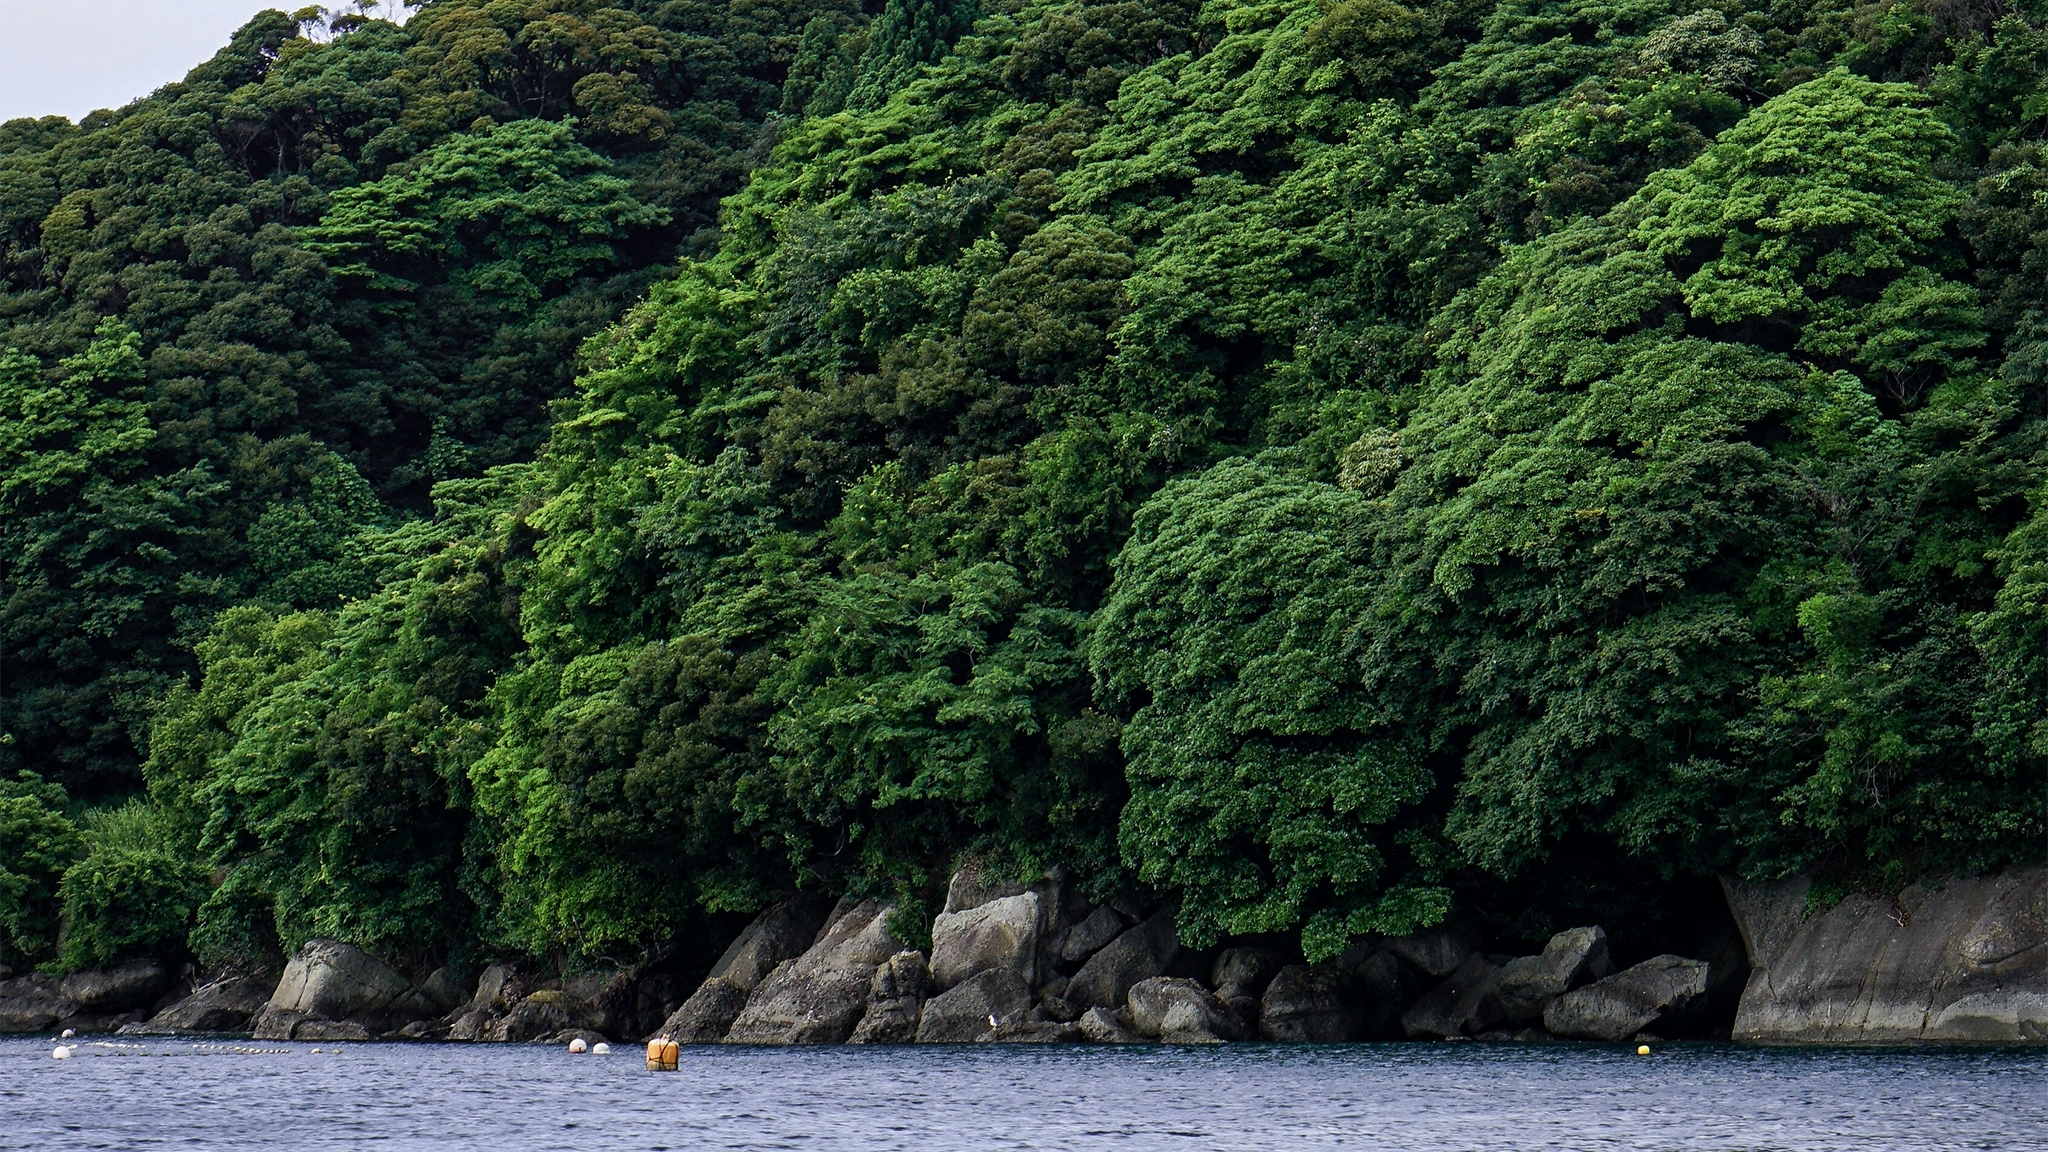 Lush greenery meets the blue waters of Lake Biwa